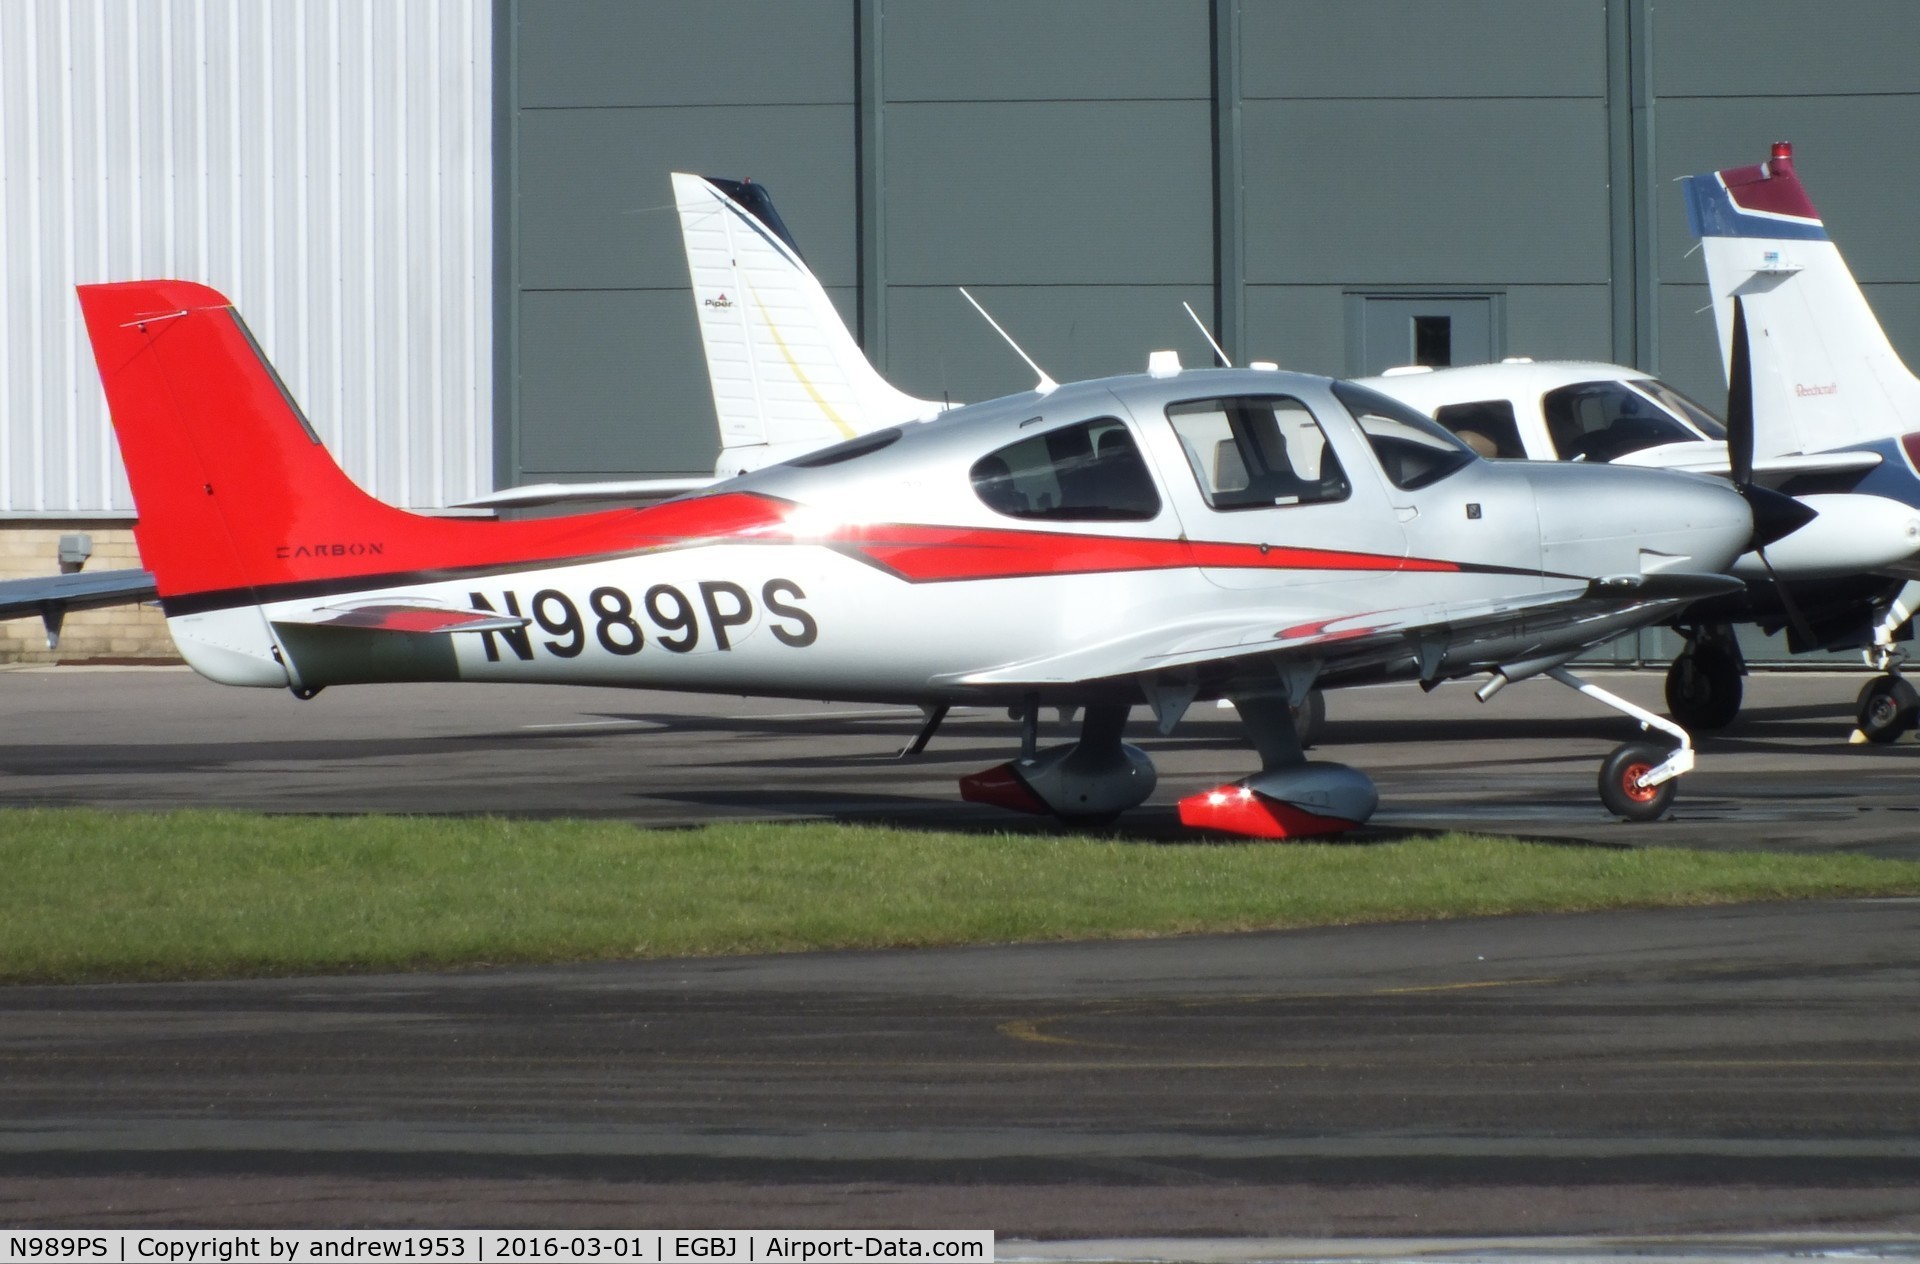 N989PS, 2014 Cirrus SR22 GTS Carbon C/N 4104, N989ps at Gloucestershire Airport.